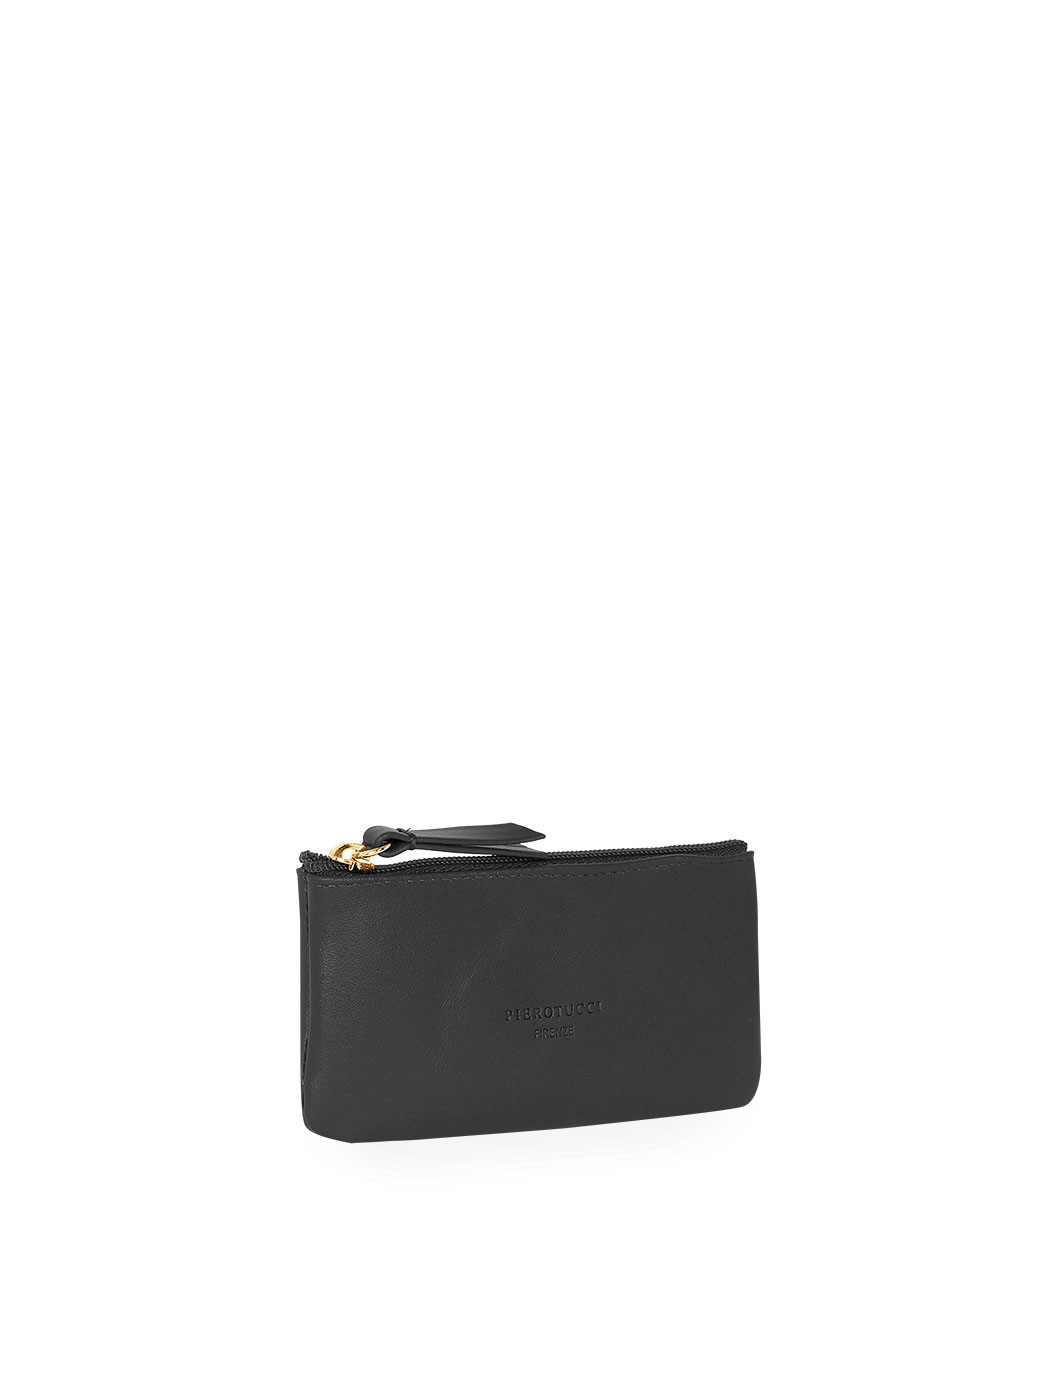 Purse Small Wallets | Handbag Bag Purses | Purse Keychain | Car Key Holder  | Leather Pouch - Coin Purses - Aliexpress